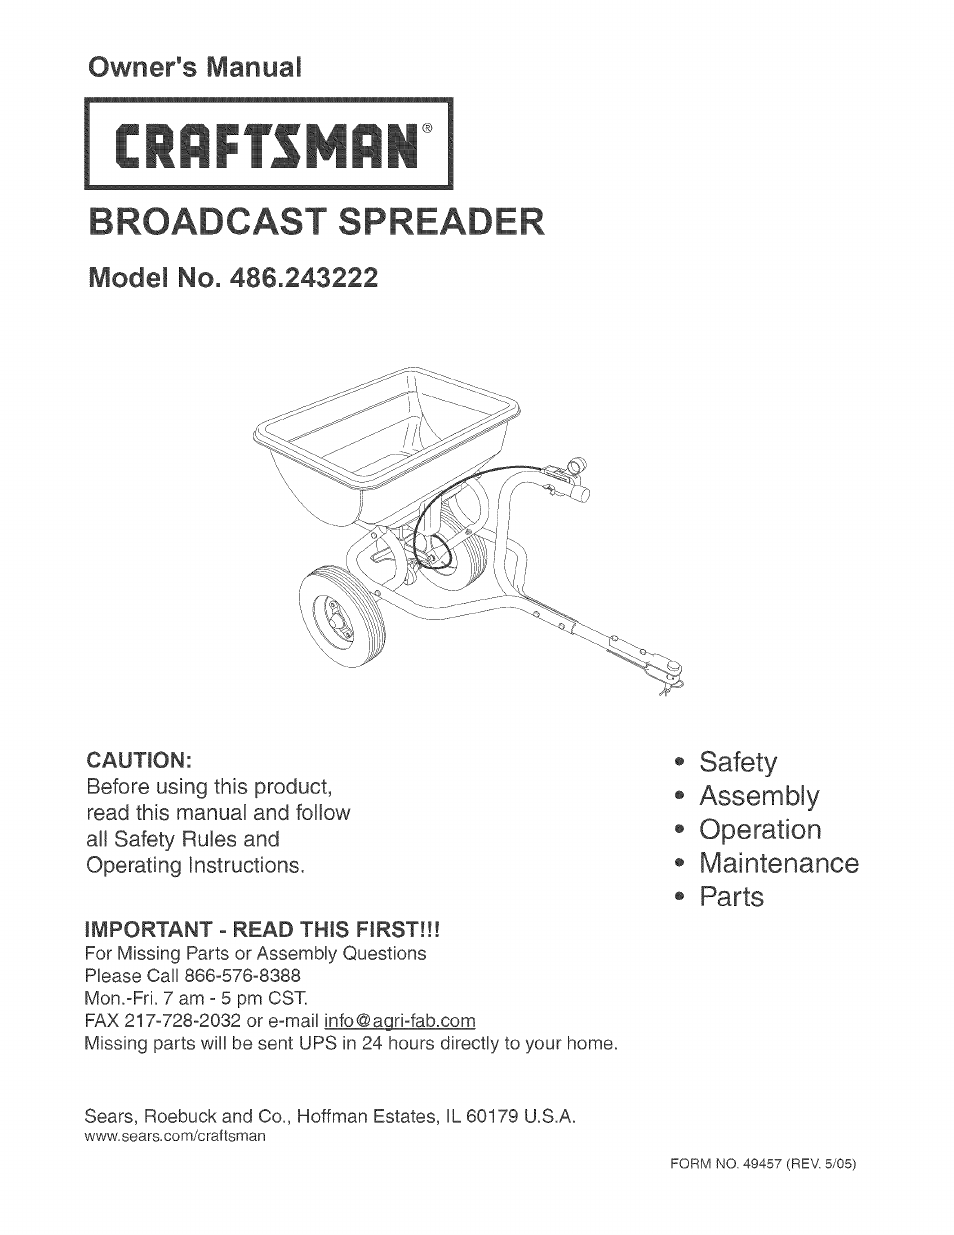 Craftsman 486.243222 User Manual | 8 pages